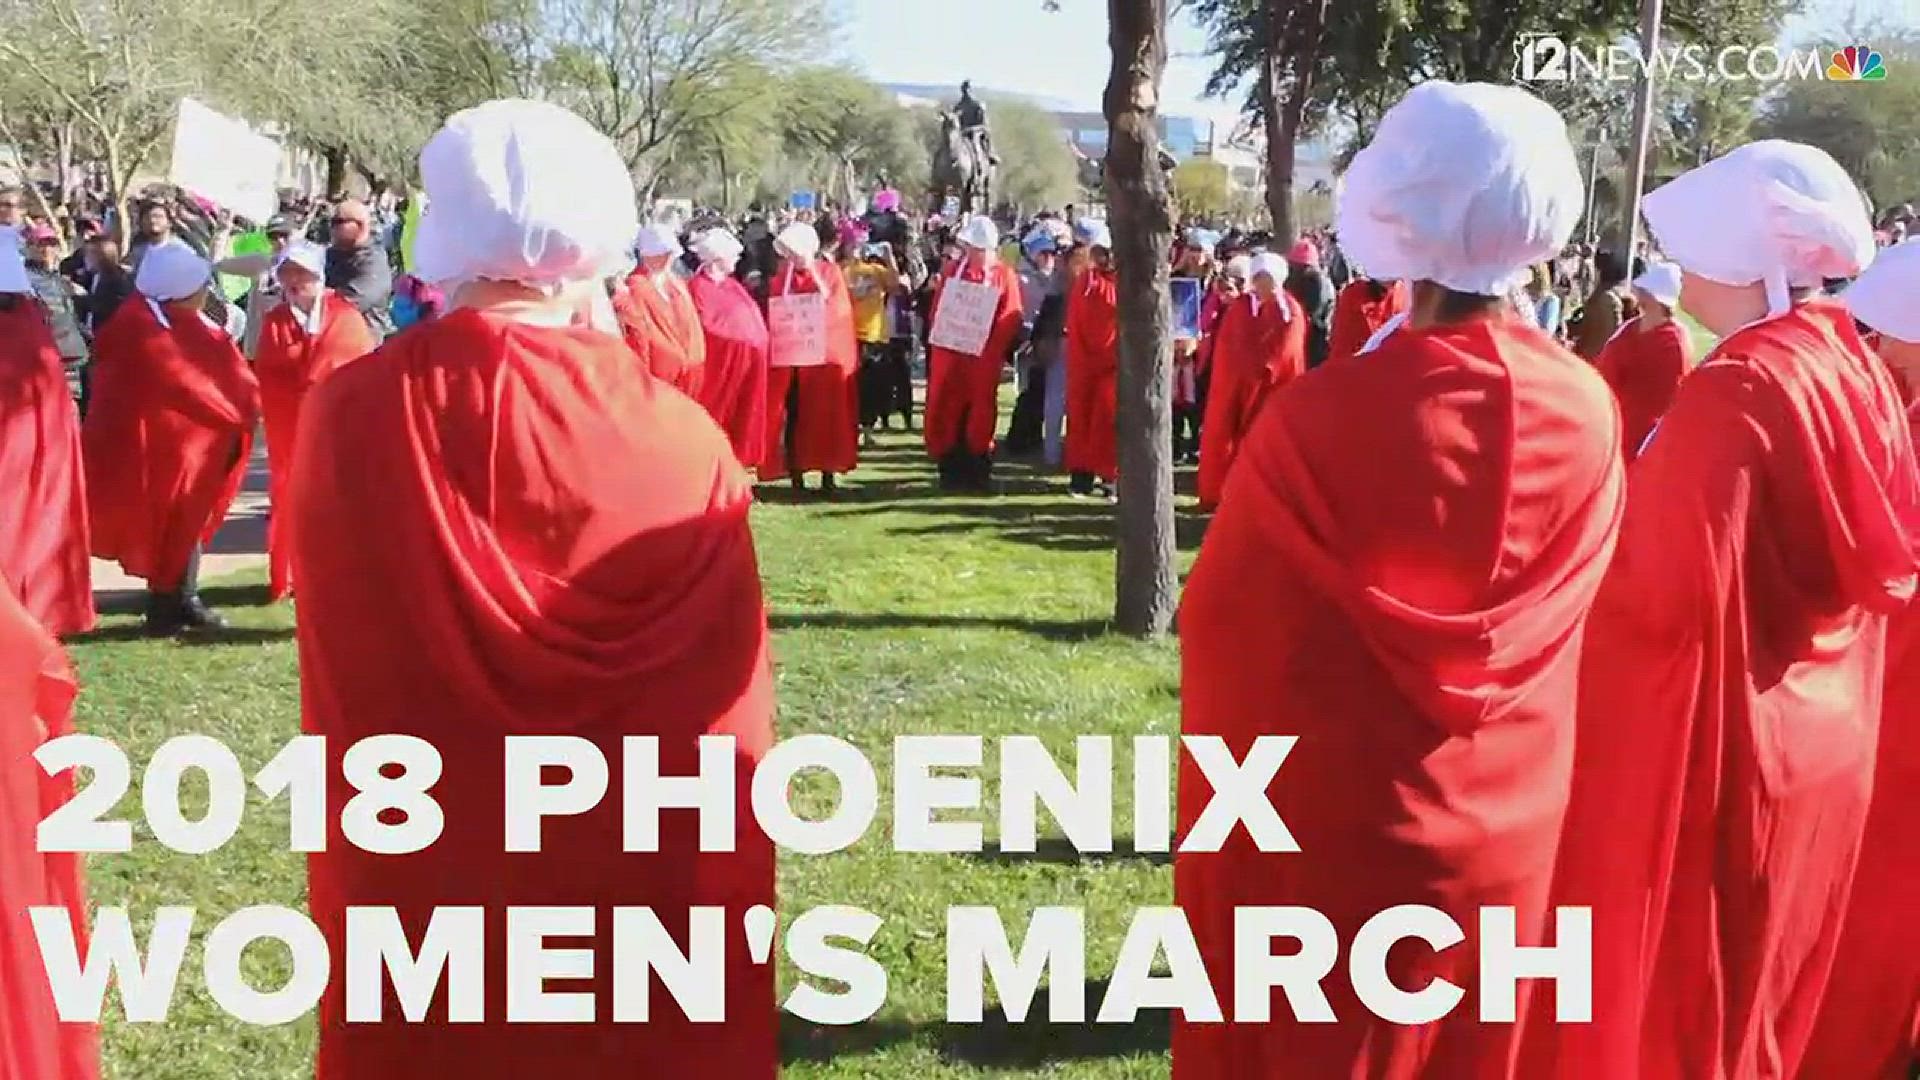 The 2018 Women's March in Phoenix drew thousands of people.